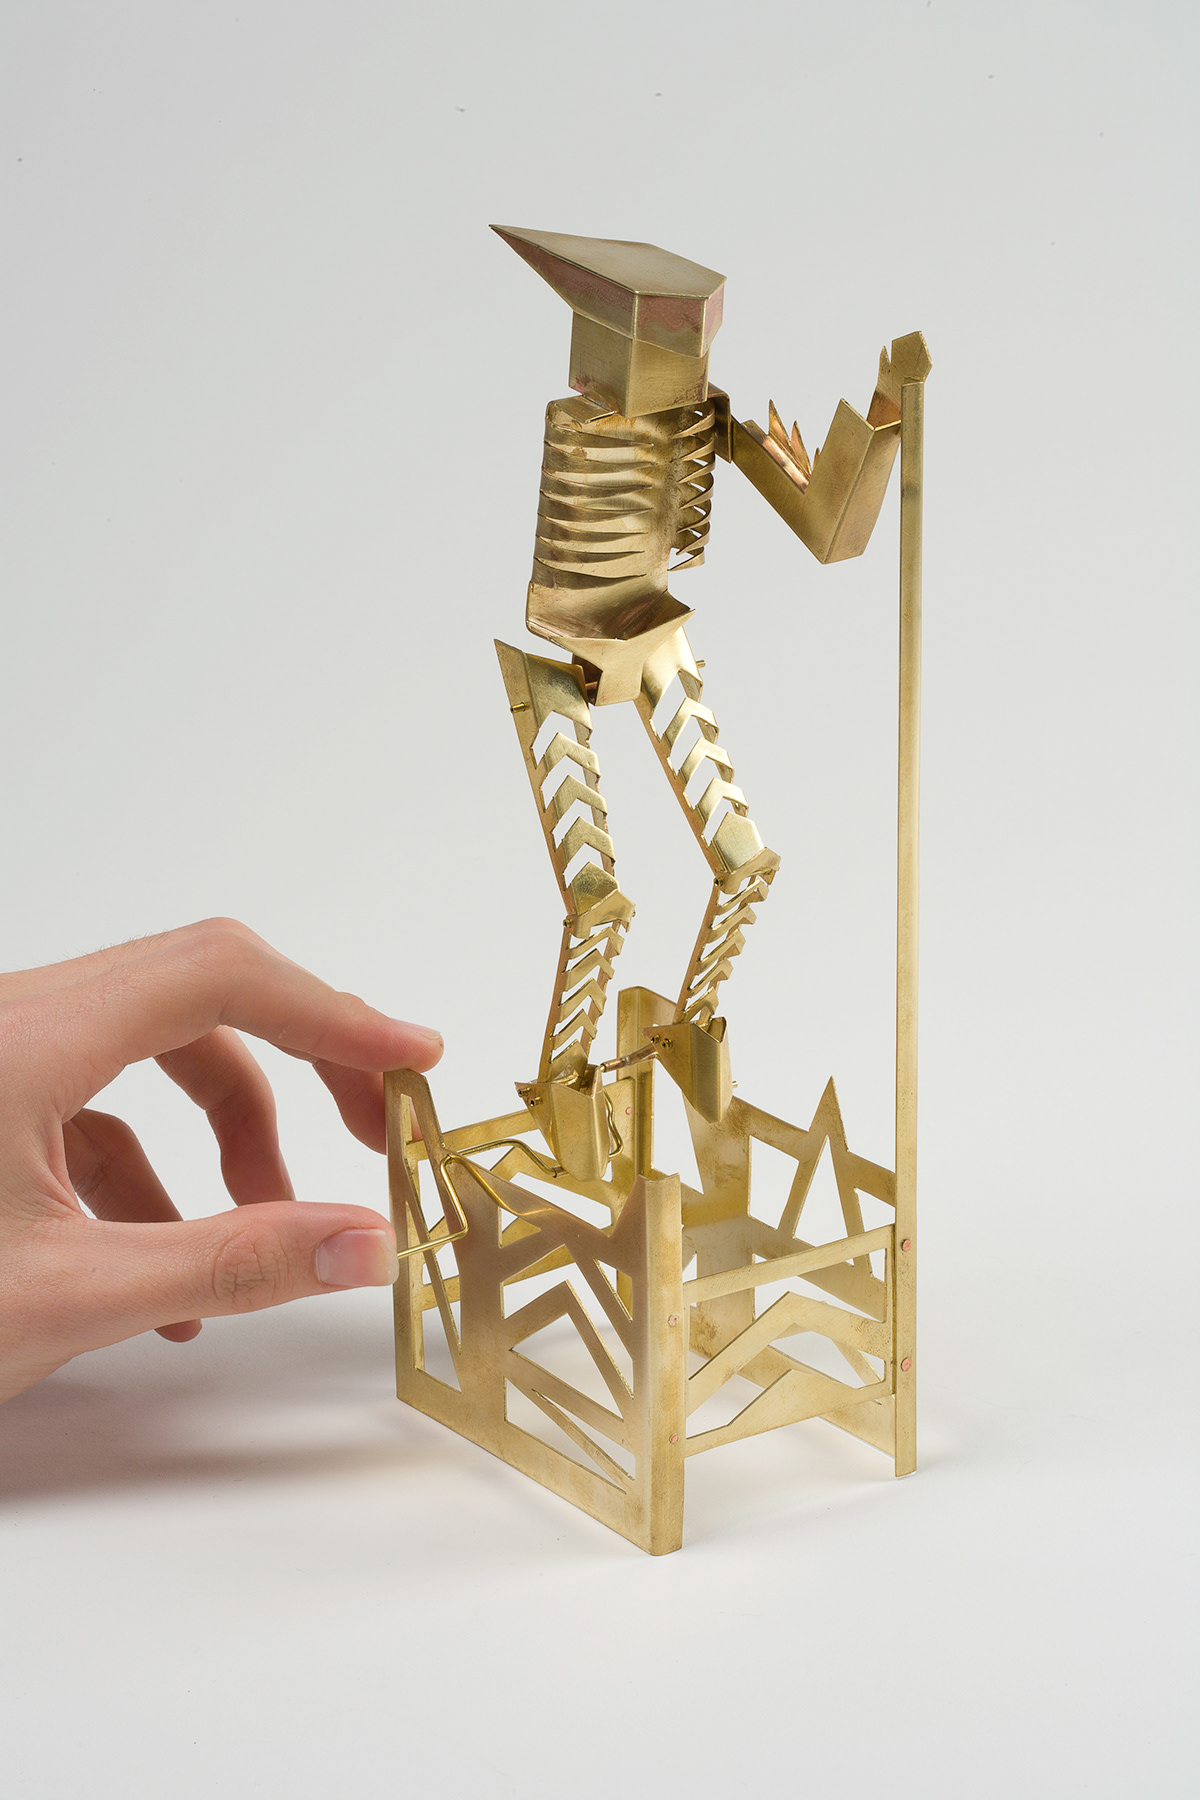 brass metals metal fine art jewelry sculpture precious metals STEAMPUNK robot automaton